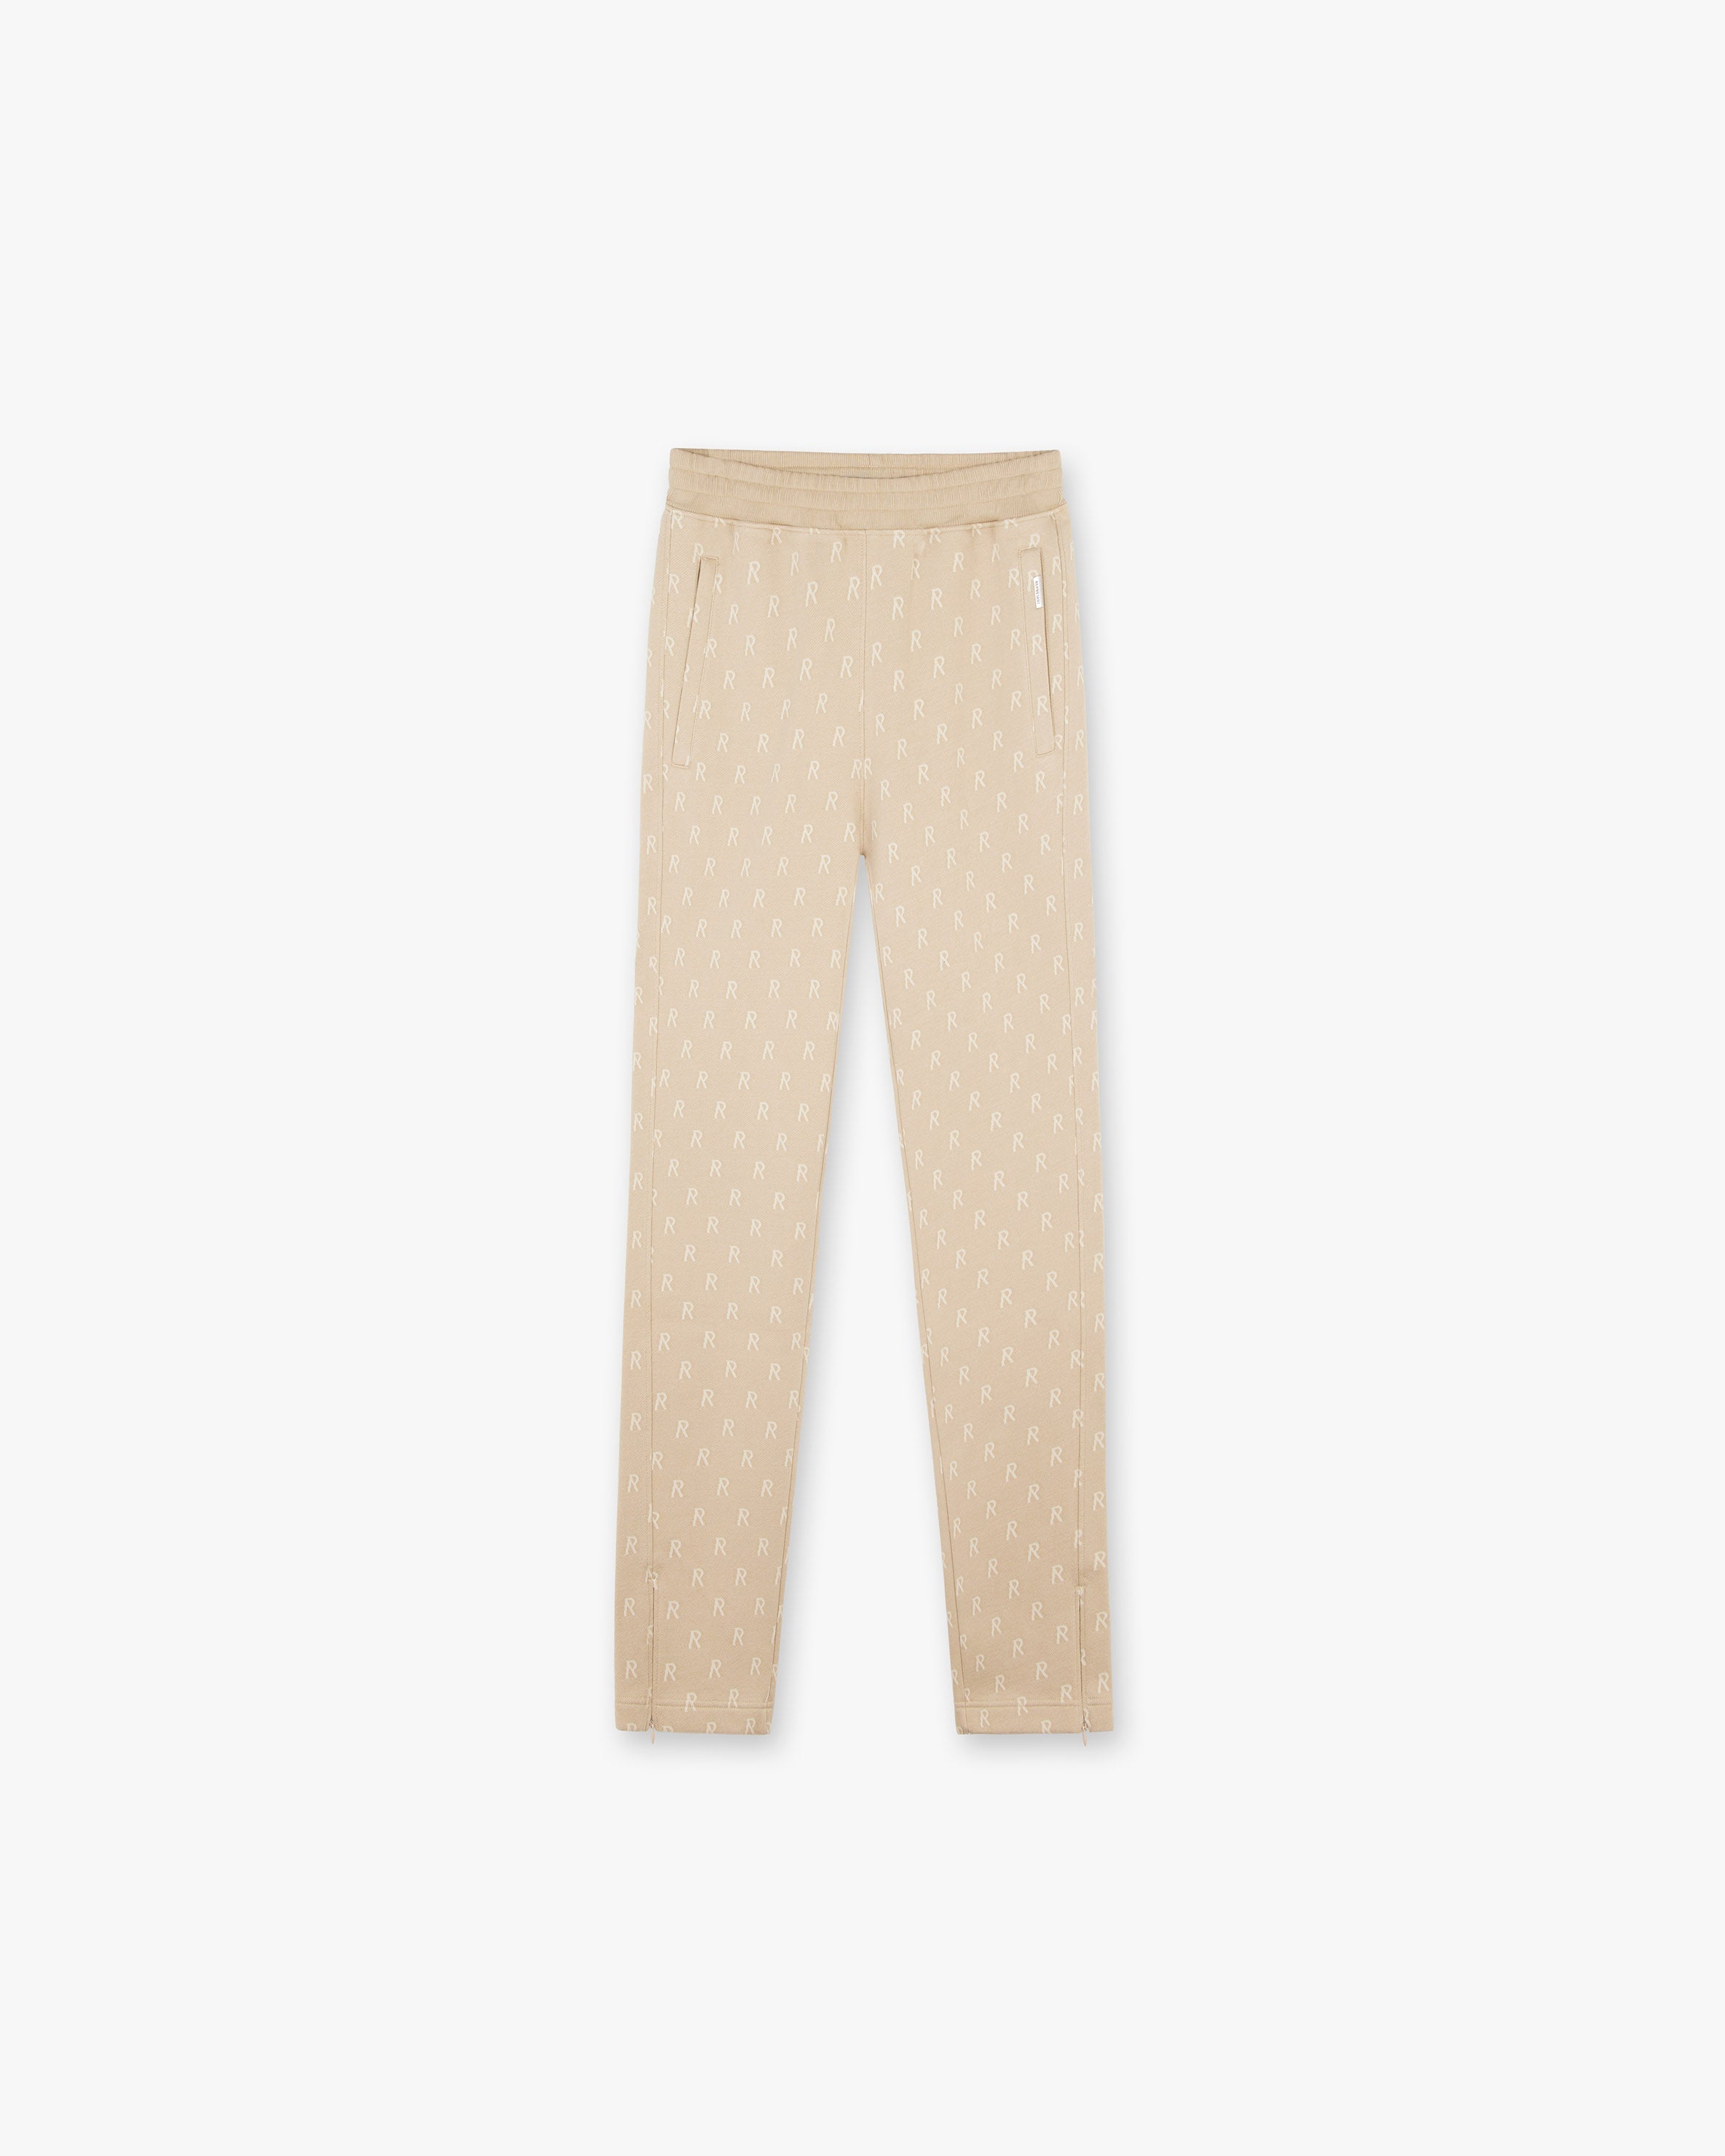 Intarsia Initial Sweatpant | Wheat Pants FW22 | Represent Clo